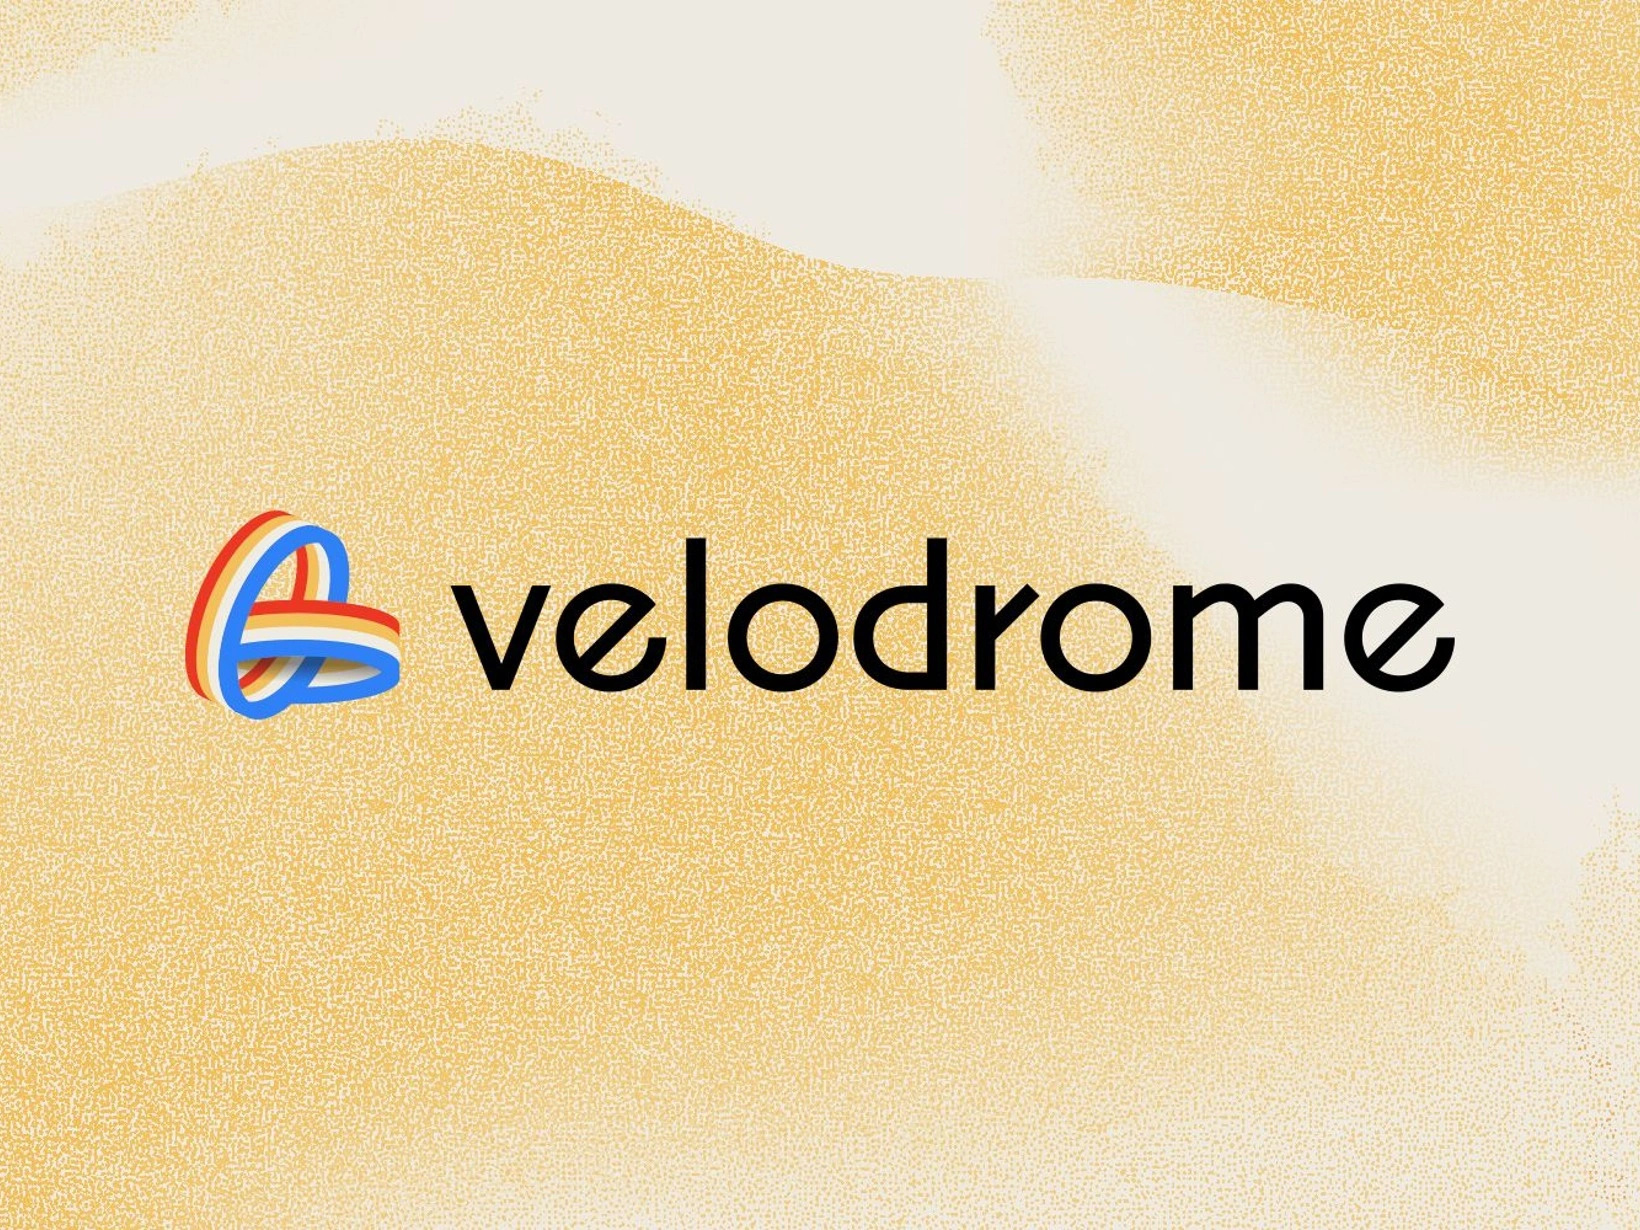 Velodrome Finance